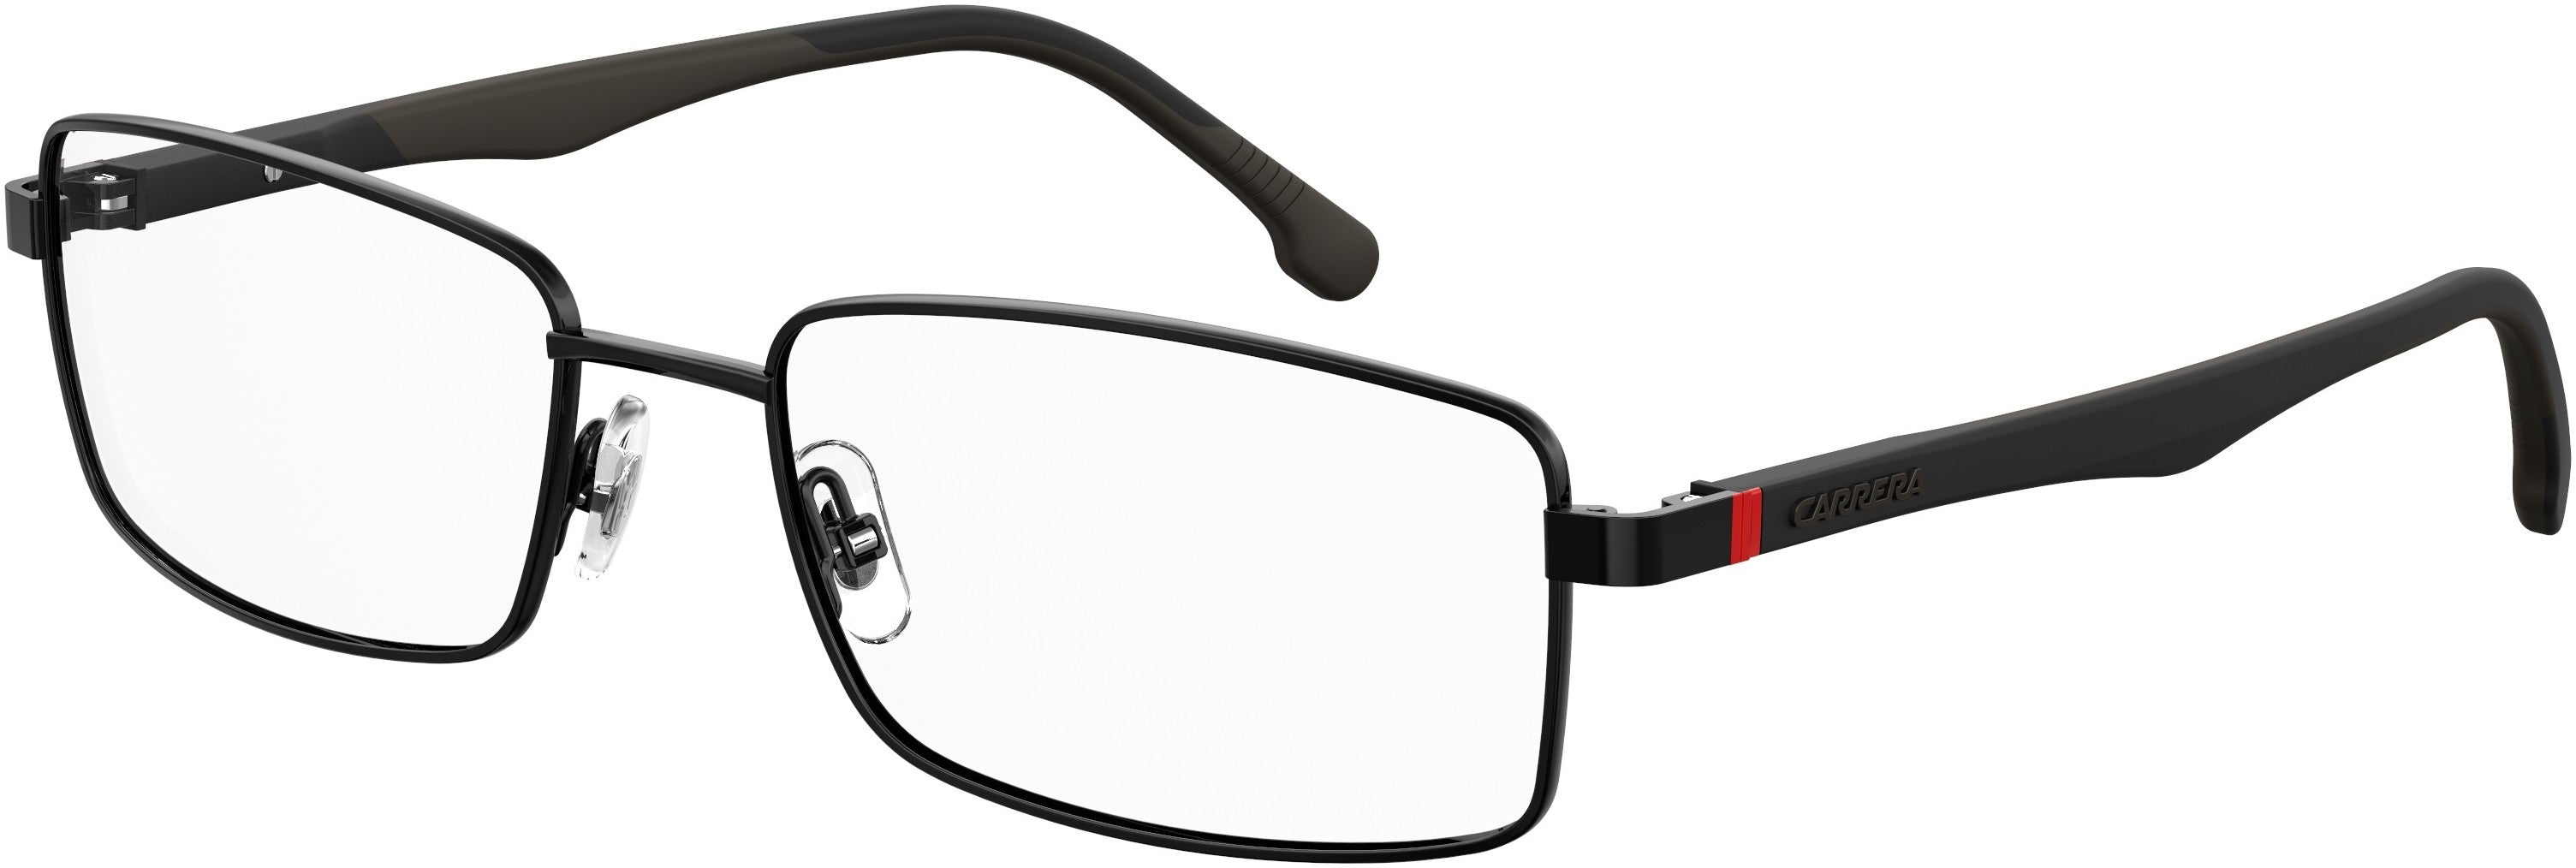  Carrera 8842 Rectangular Eyeglasses 0807-0807  Black (00 Demo Lens)